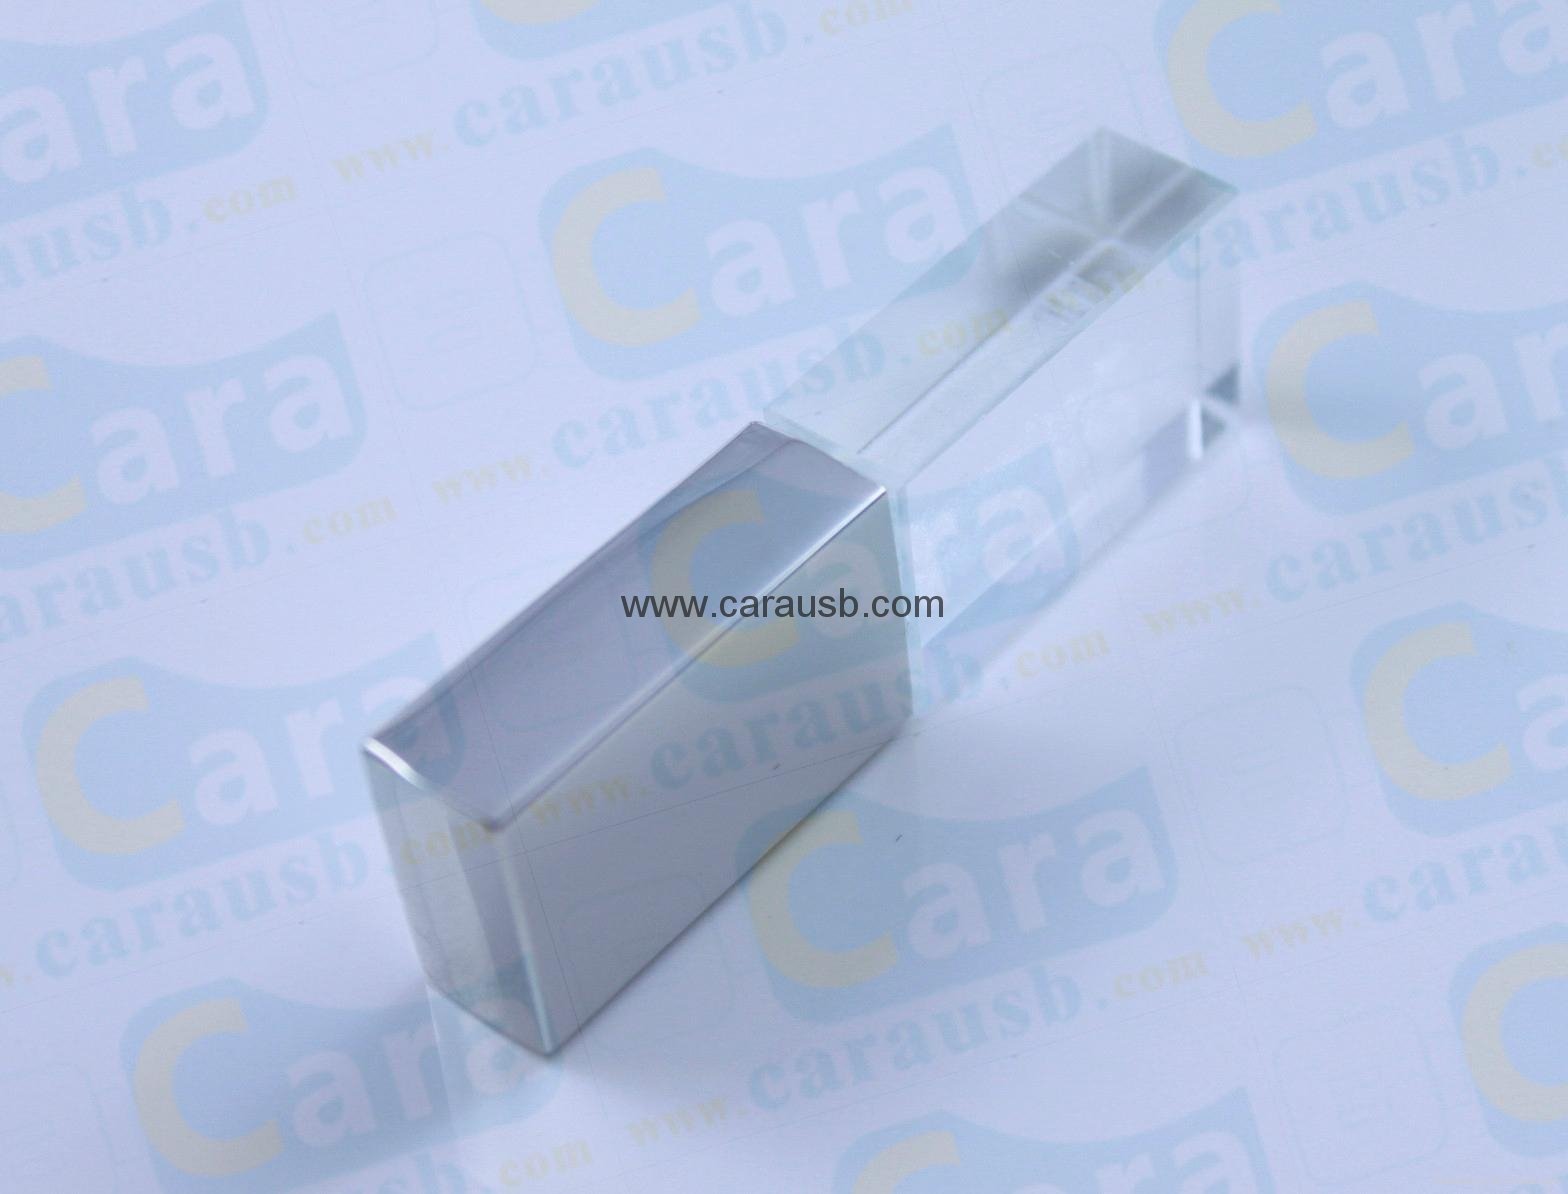 CaraUSB crystal usb flash 16GB LED light up 3D logo clear acrylic flashdrives 5